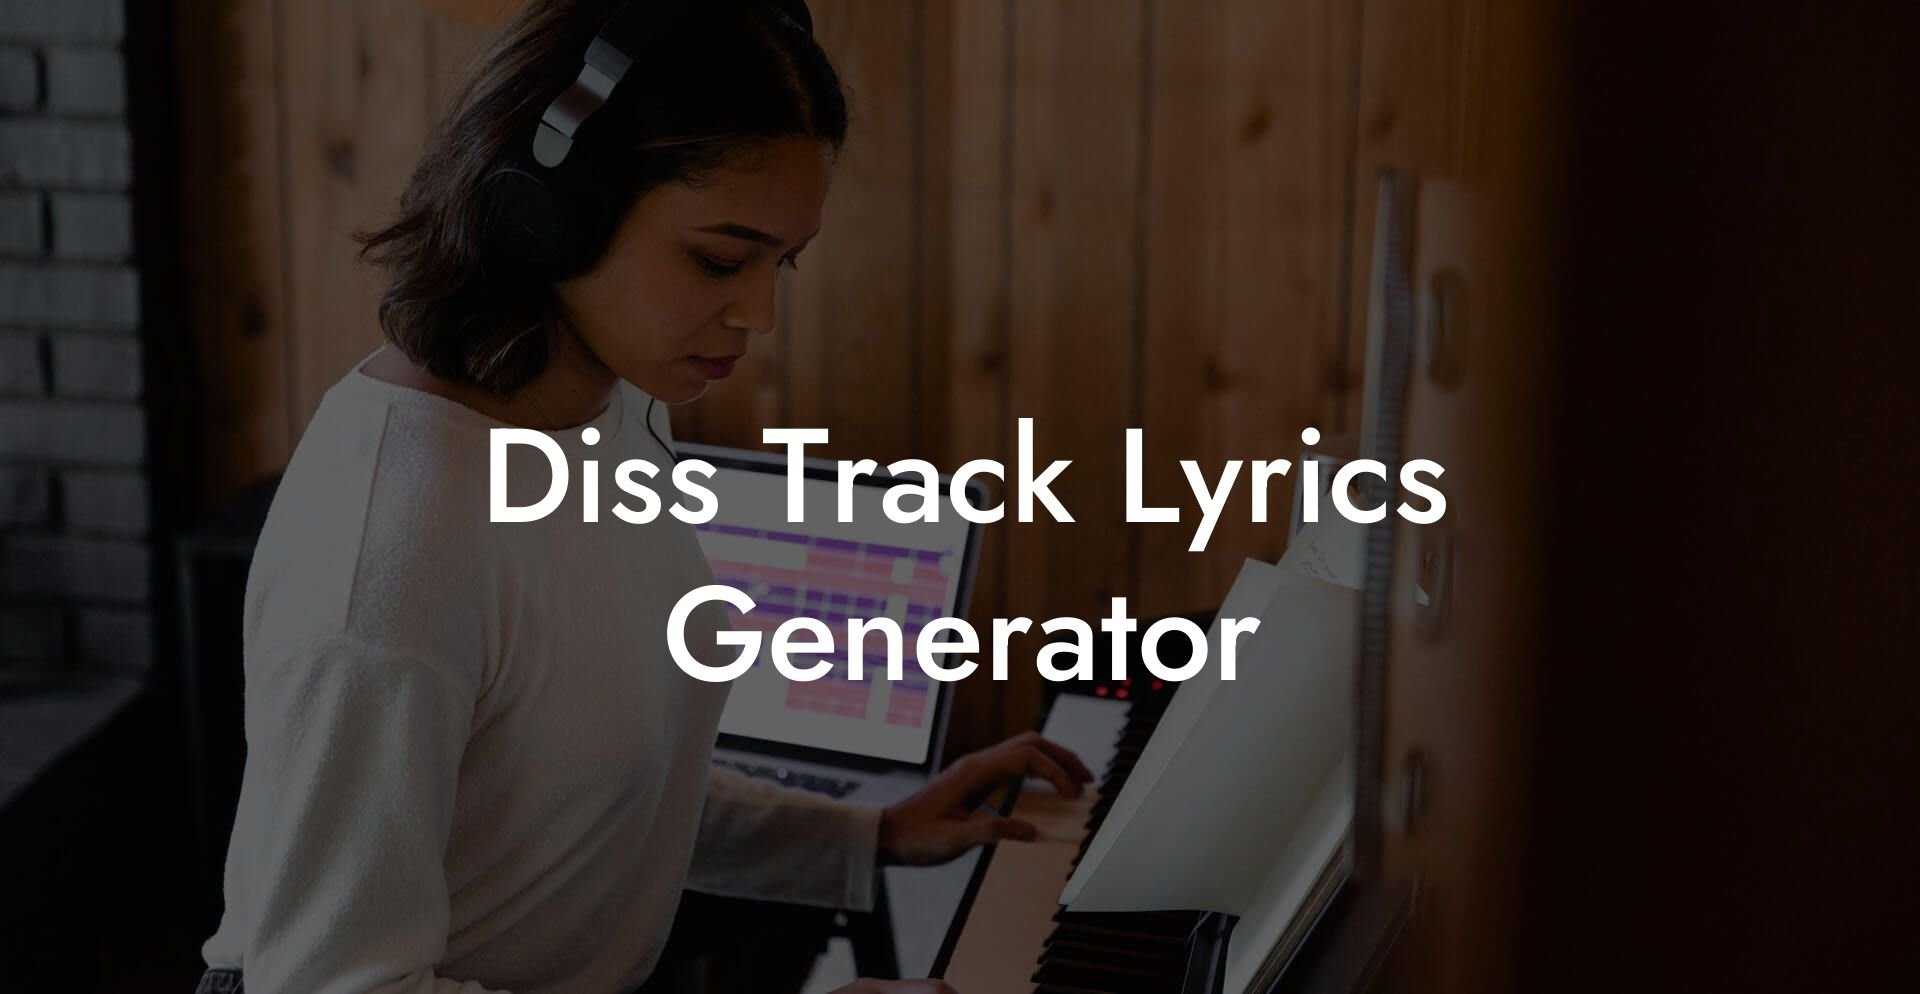 diss track lyrics generator lyric assistant